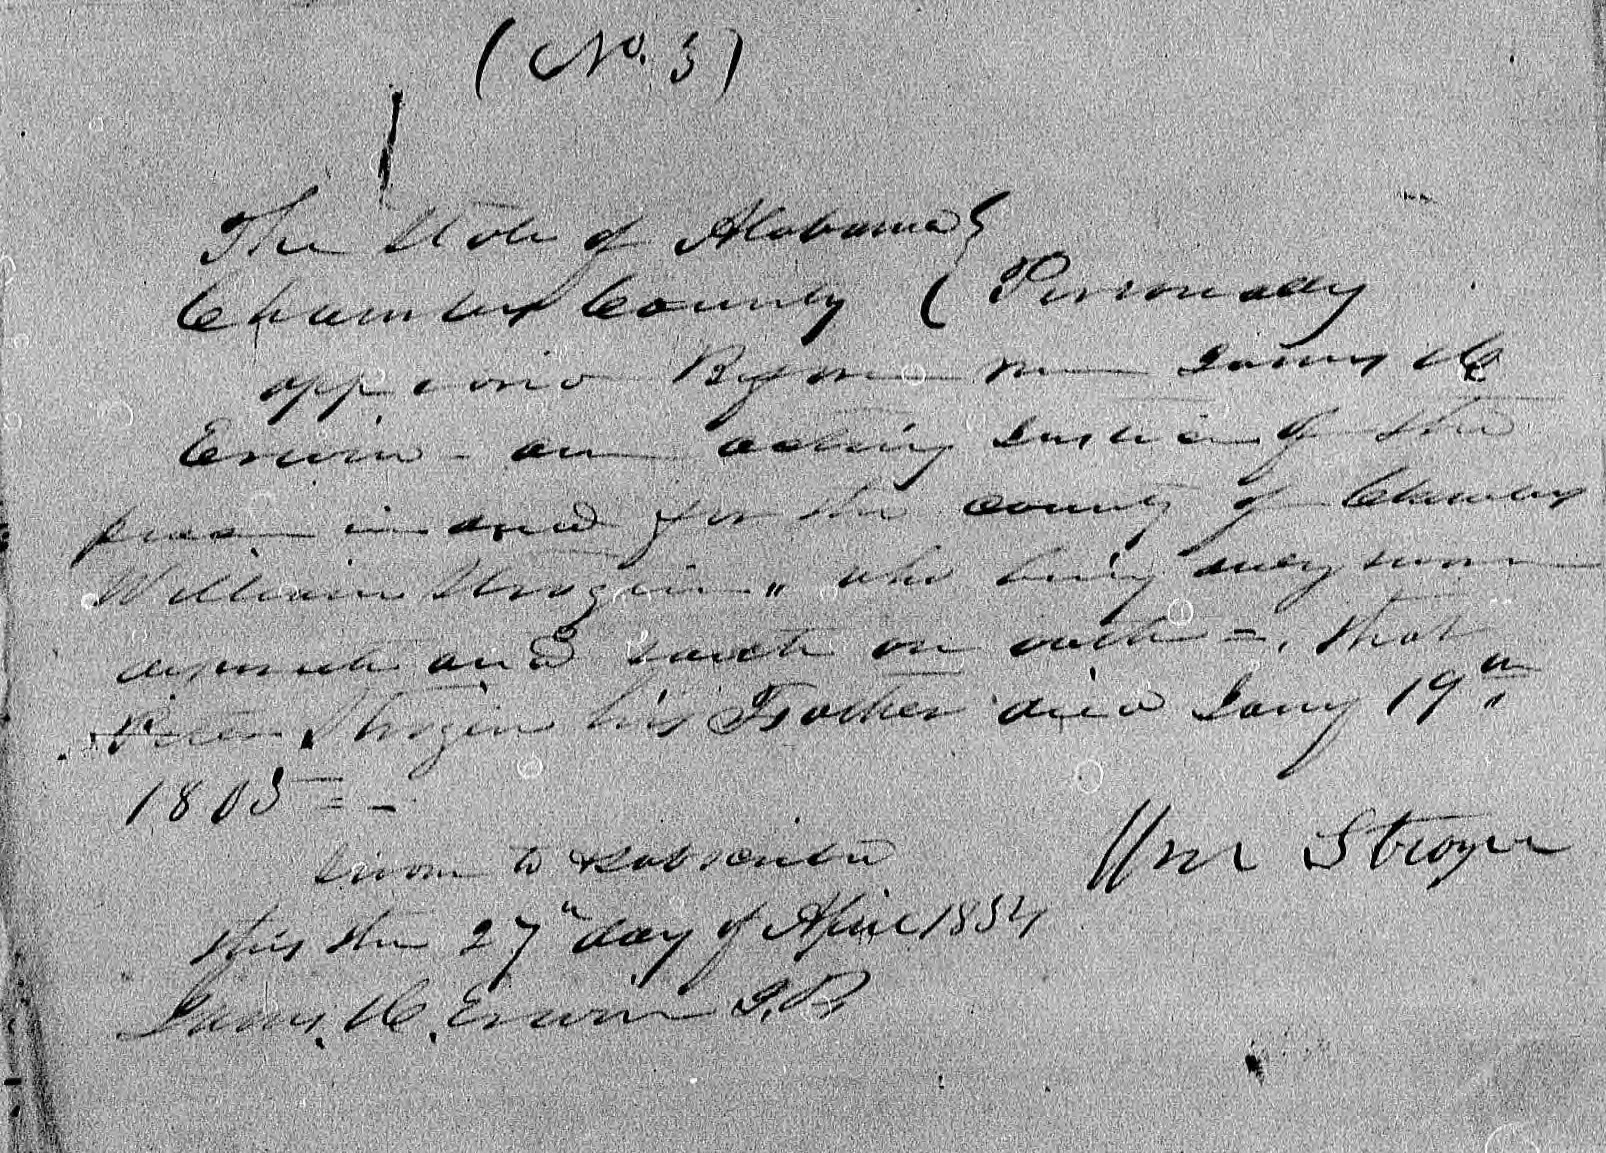 Affidavit of William Strozier in support of a Pension Claim for Margaret Strozier, 27 April 1854